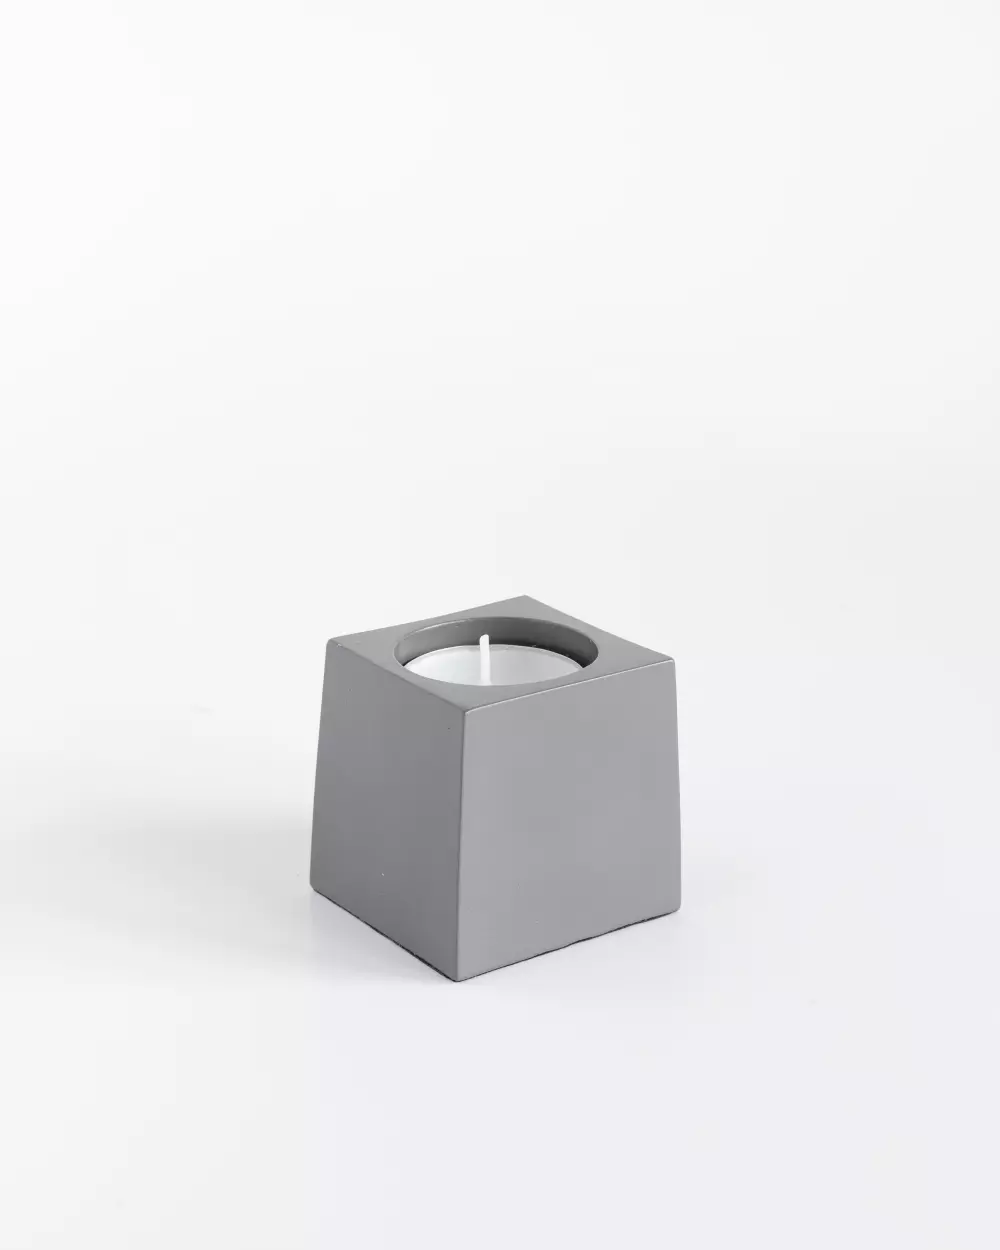 Cube T-lysholder 5cm Grå, 7072347190099, 19009, Interiør, Telysholdere, Coming Home, Cube t-lysholder 5x5x6cm grå